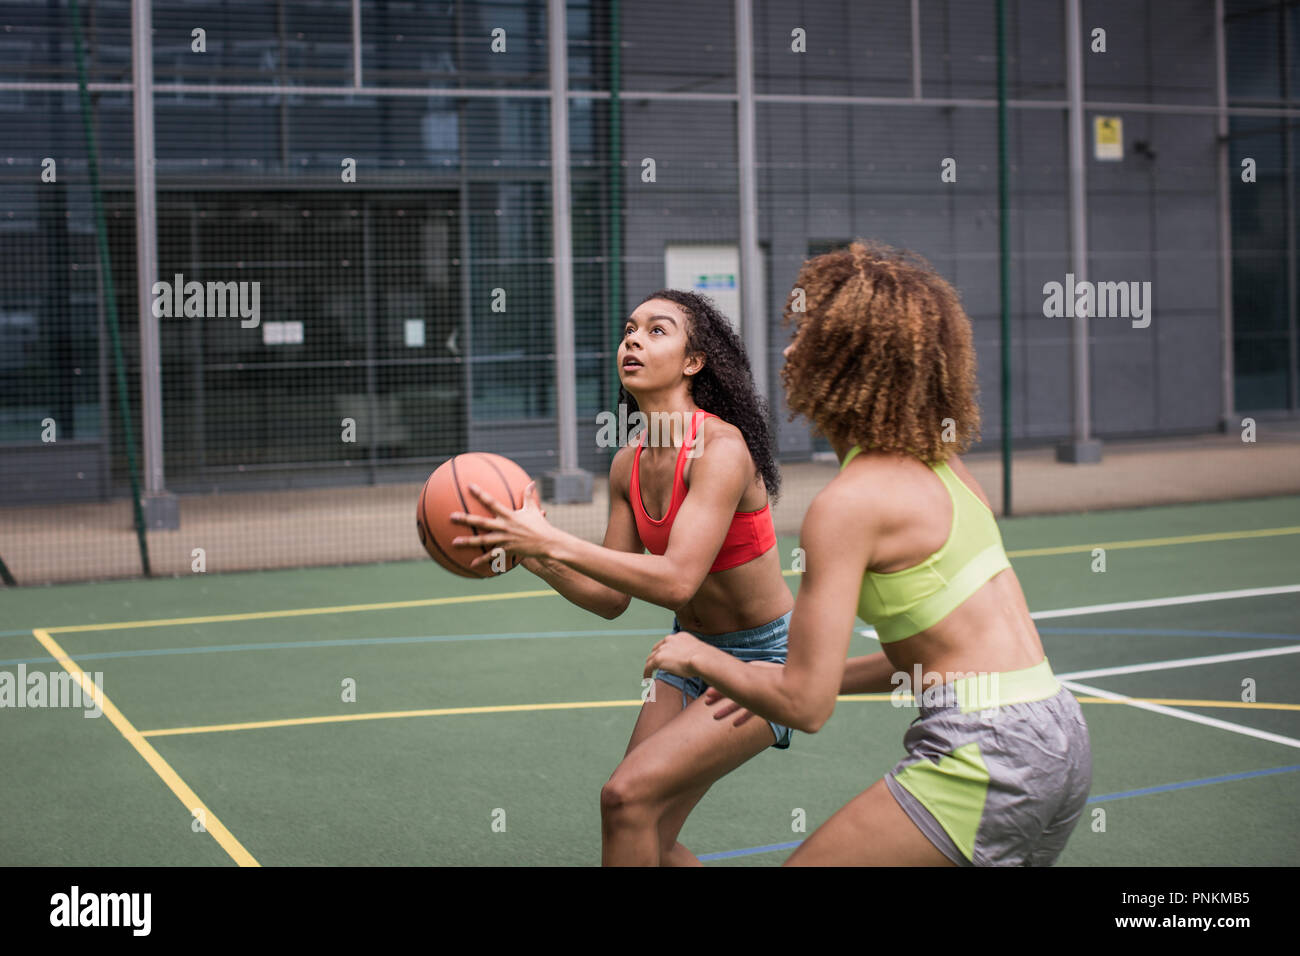 Adulto joven jugador de baloncesto femenino va a rodar un aro Foto de stock